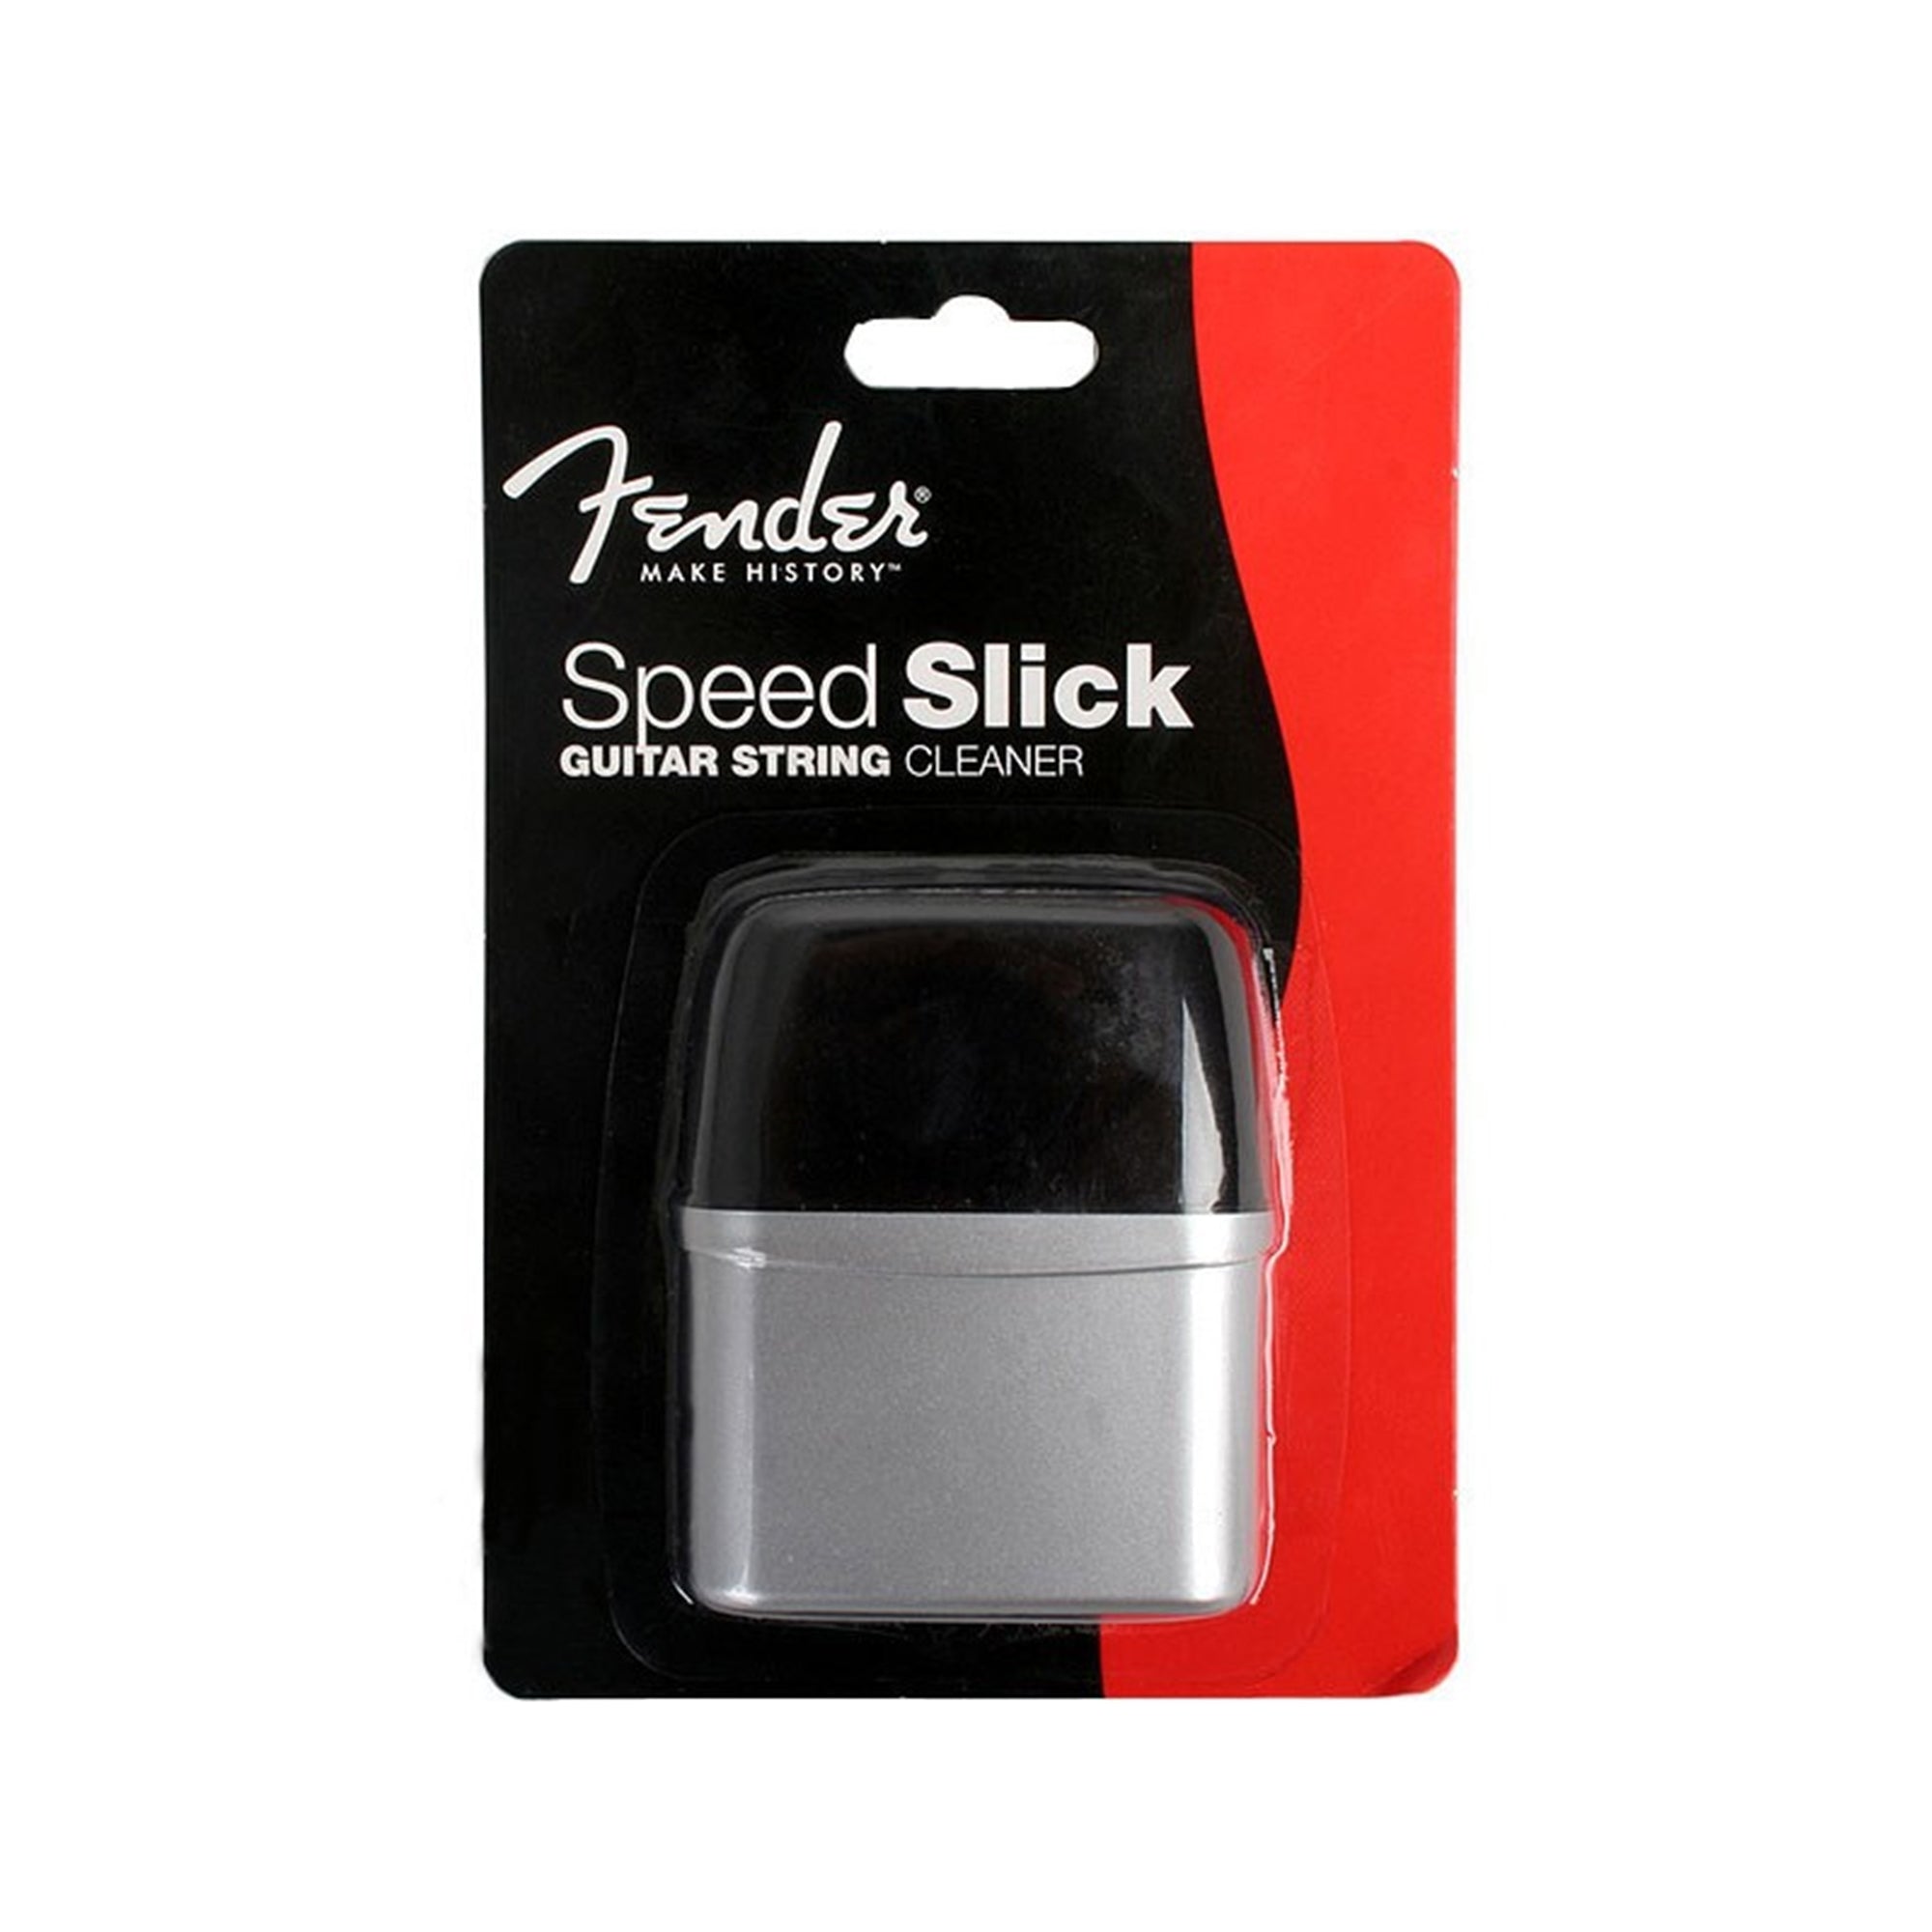 FENDER #0990521100 Speed Slick Guitar String Cleaner, Black/Silver